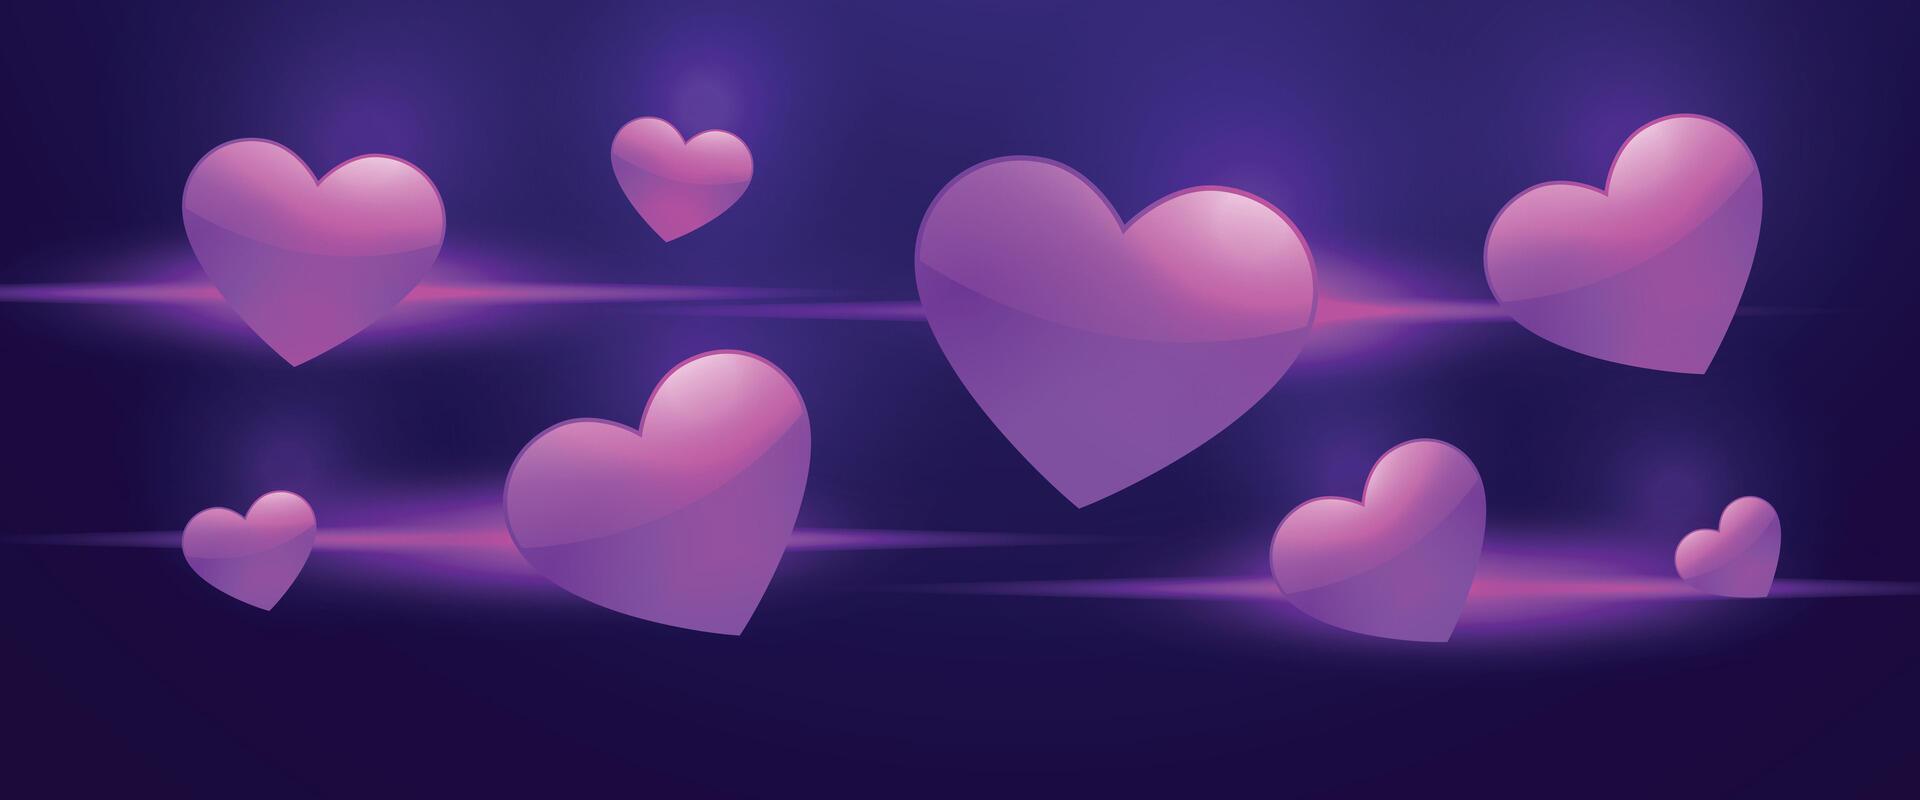 valentines day lovely heart themed banner for romantic postings vector